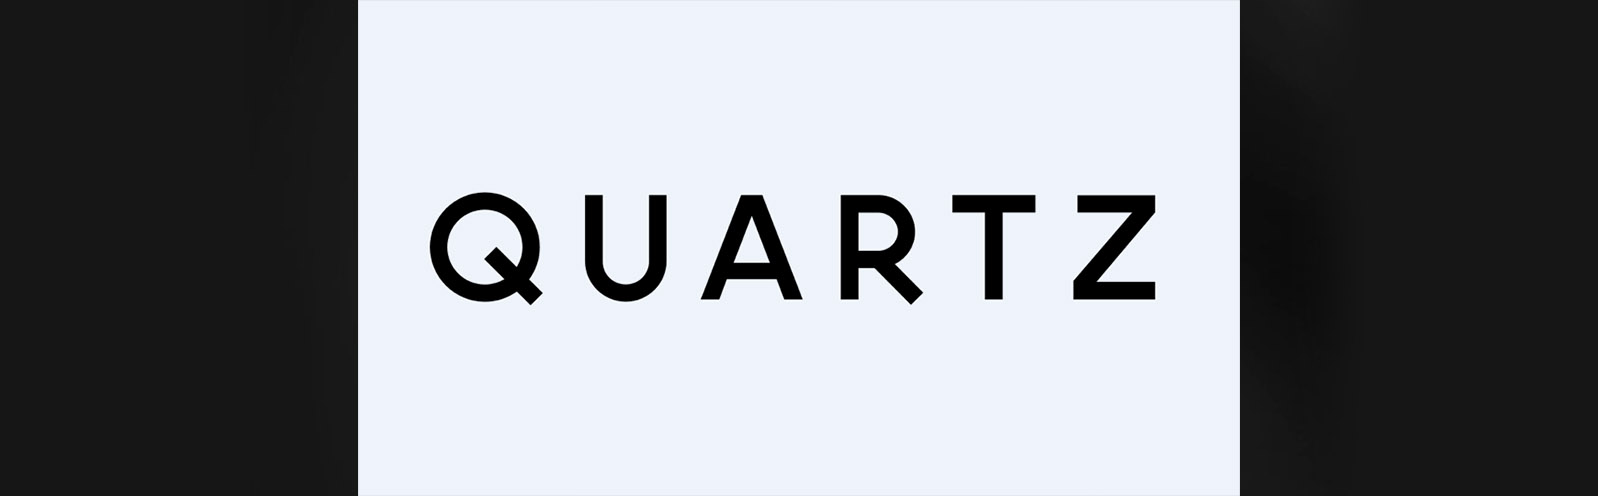  Quartz logo